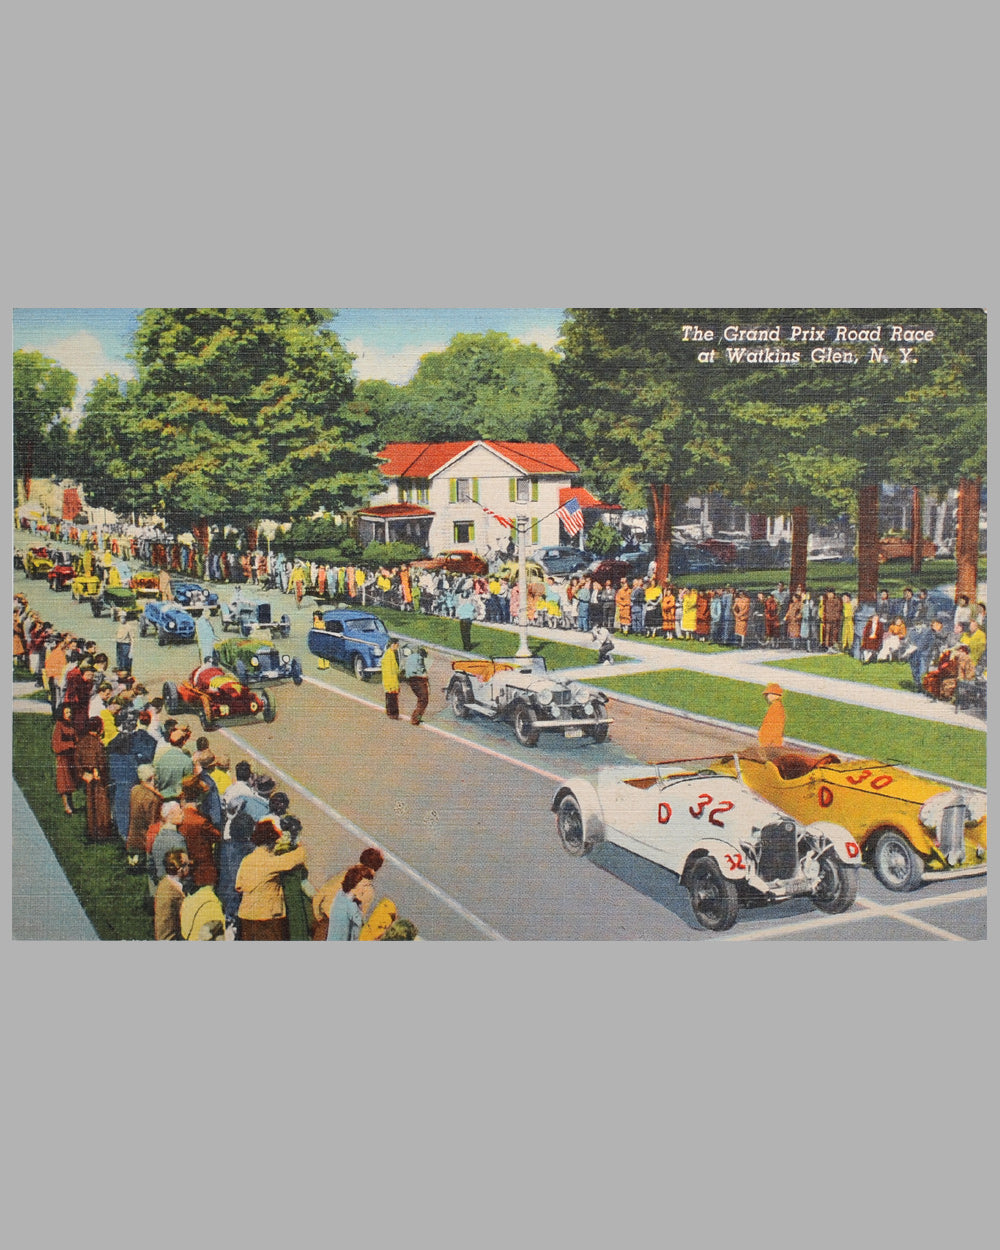 Watkins Glen Grand Prix Road Race “C.T. Art-Colortone” post card by Curteich-Chicago, 1948